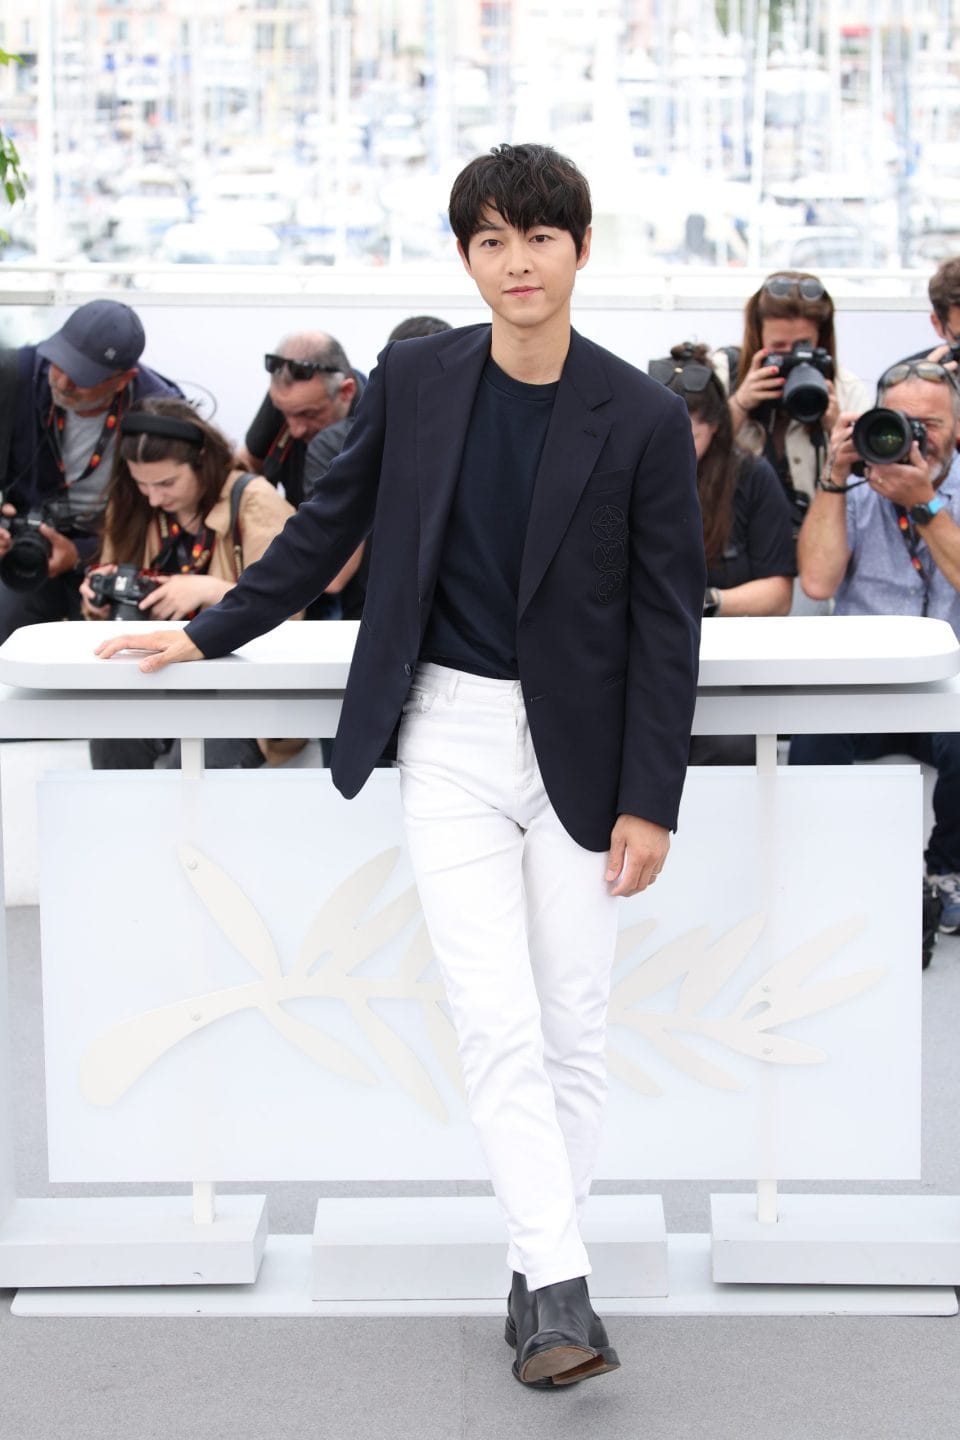 Song Joong Ki is Louis Vuitton's newest house ambassador